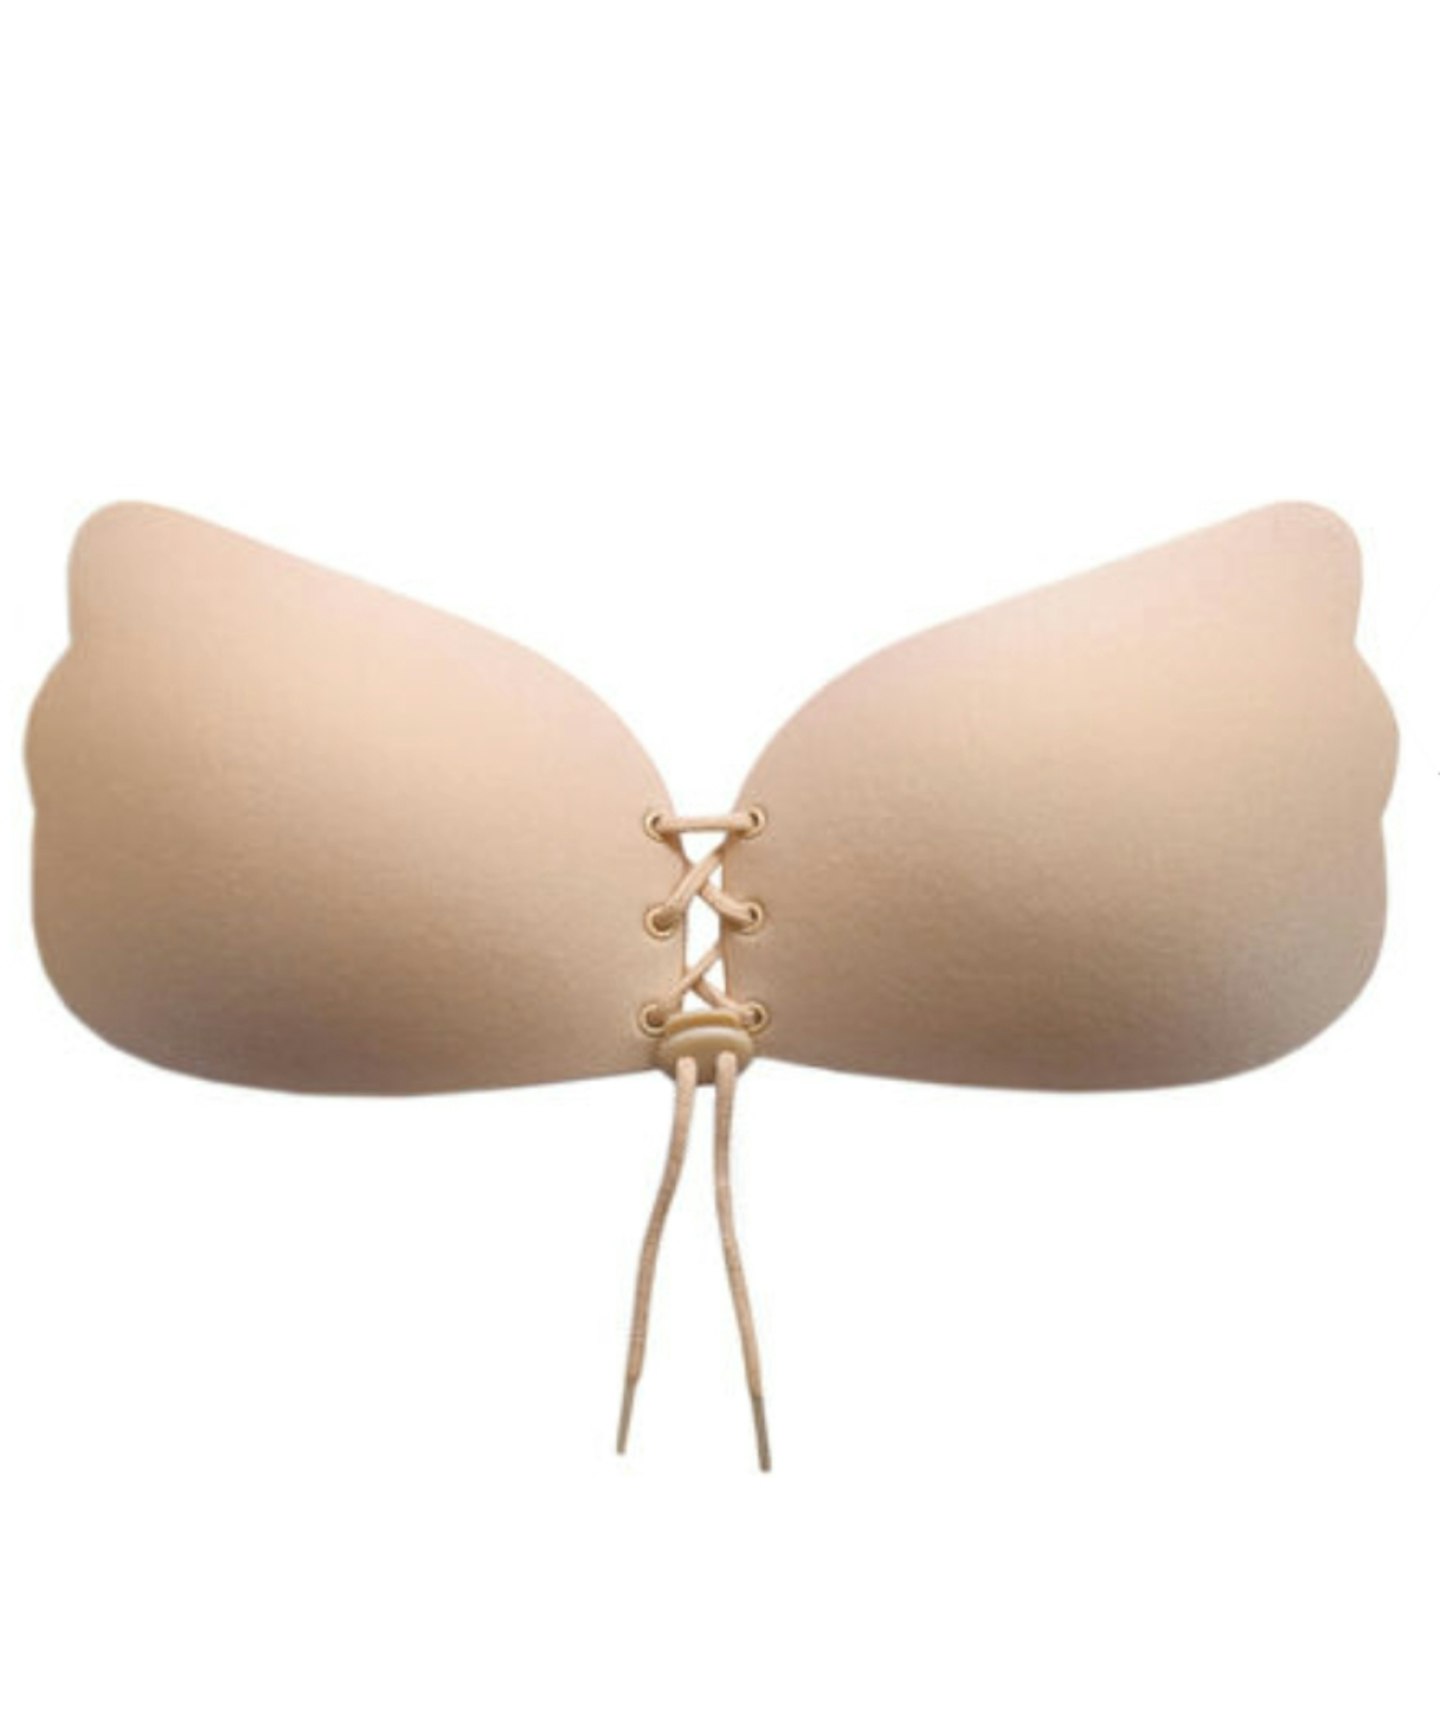 best-stick-on-bras-buy-online-UK-2023-amazon-john-lewis-ann-summers-selfridges-asos-plunge-adhesive-5.jpg